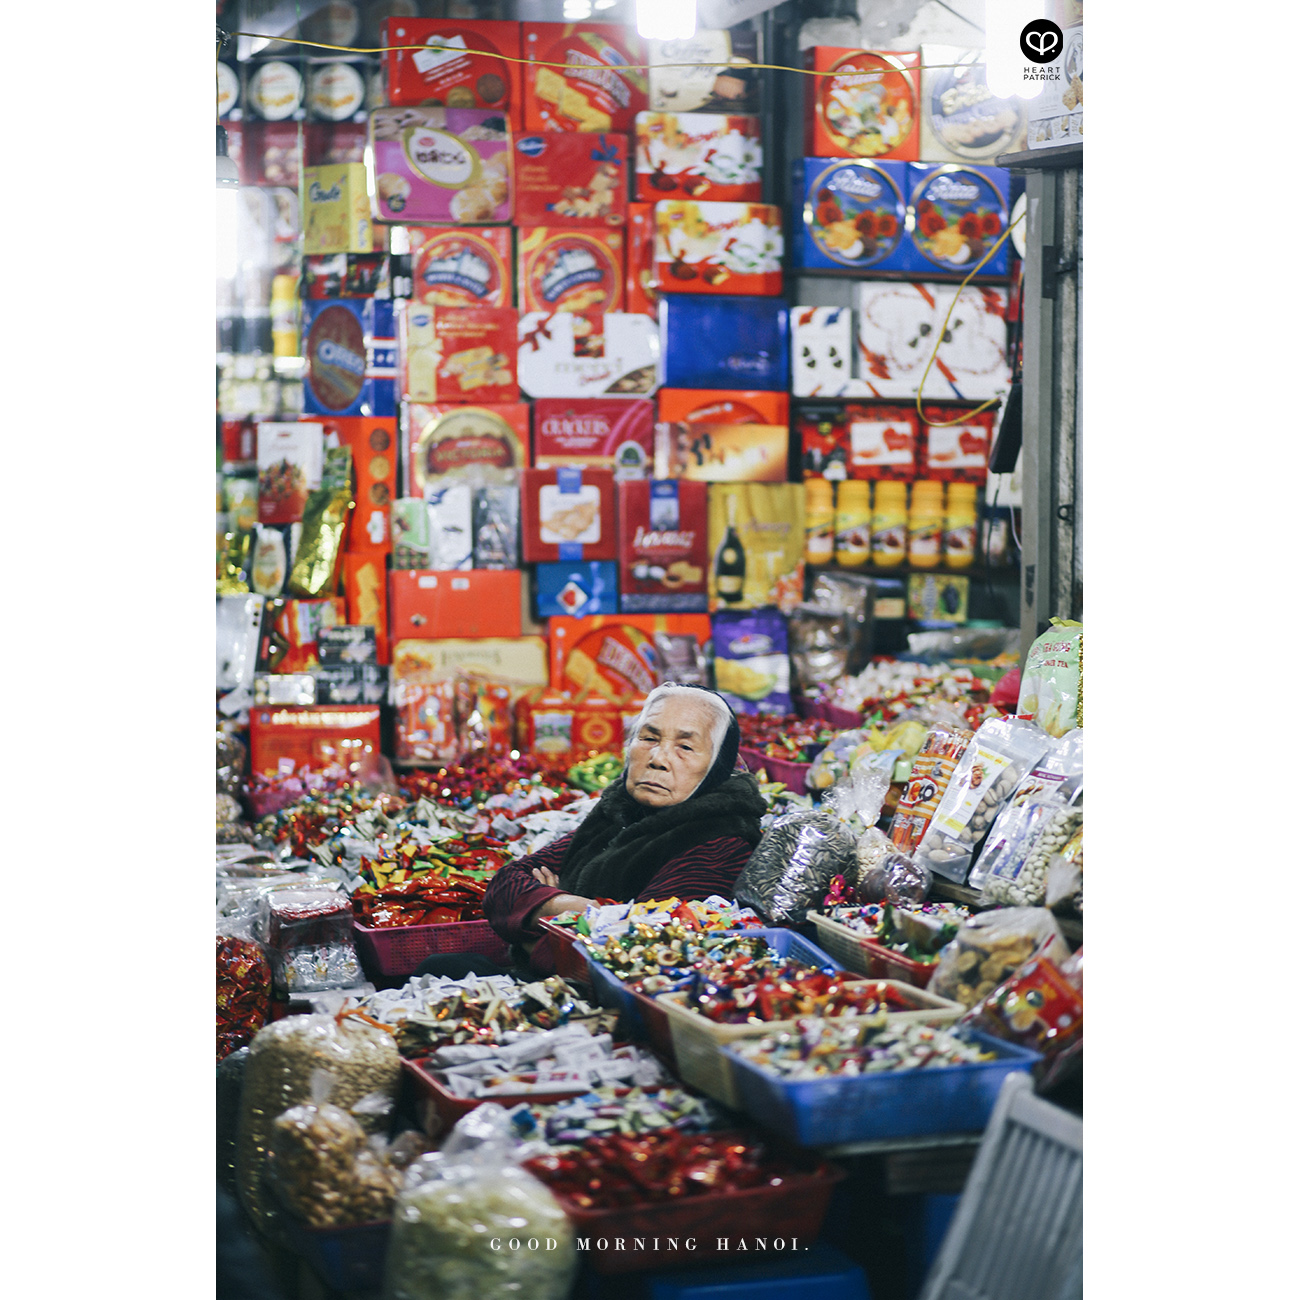 heartpatrick travel hanoi vietnam street photography vietnamese candy store